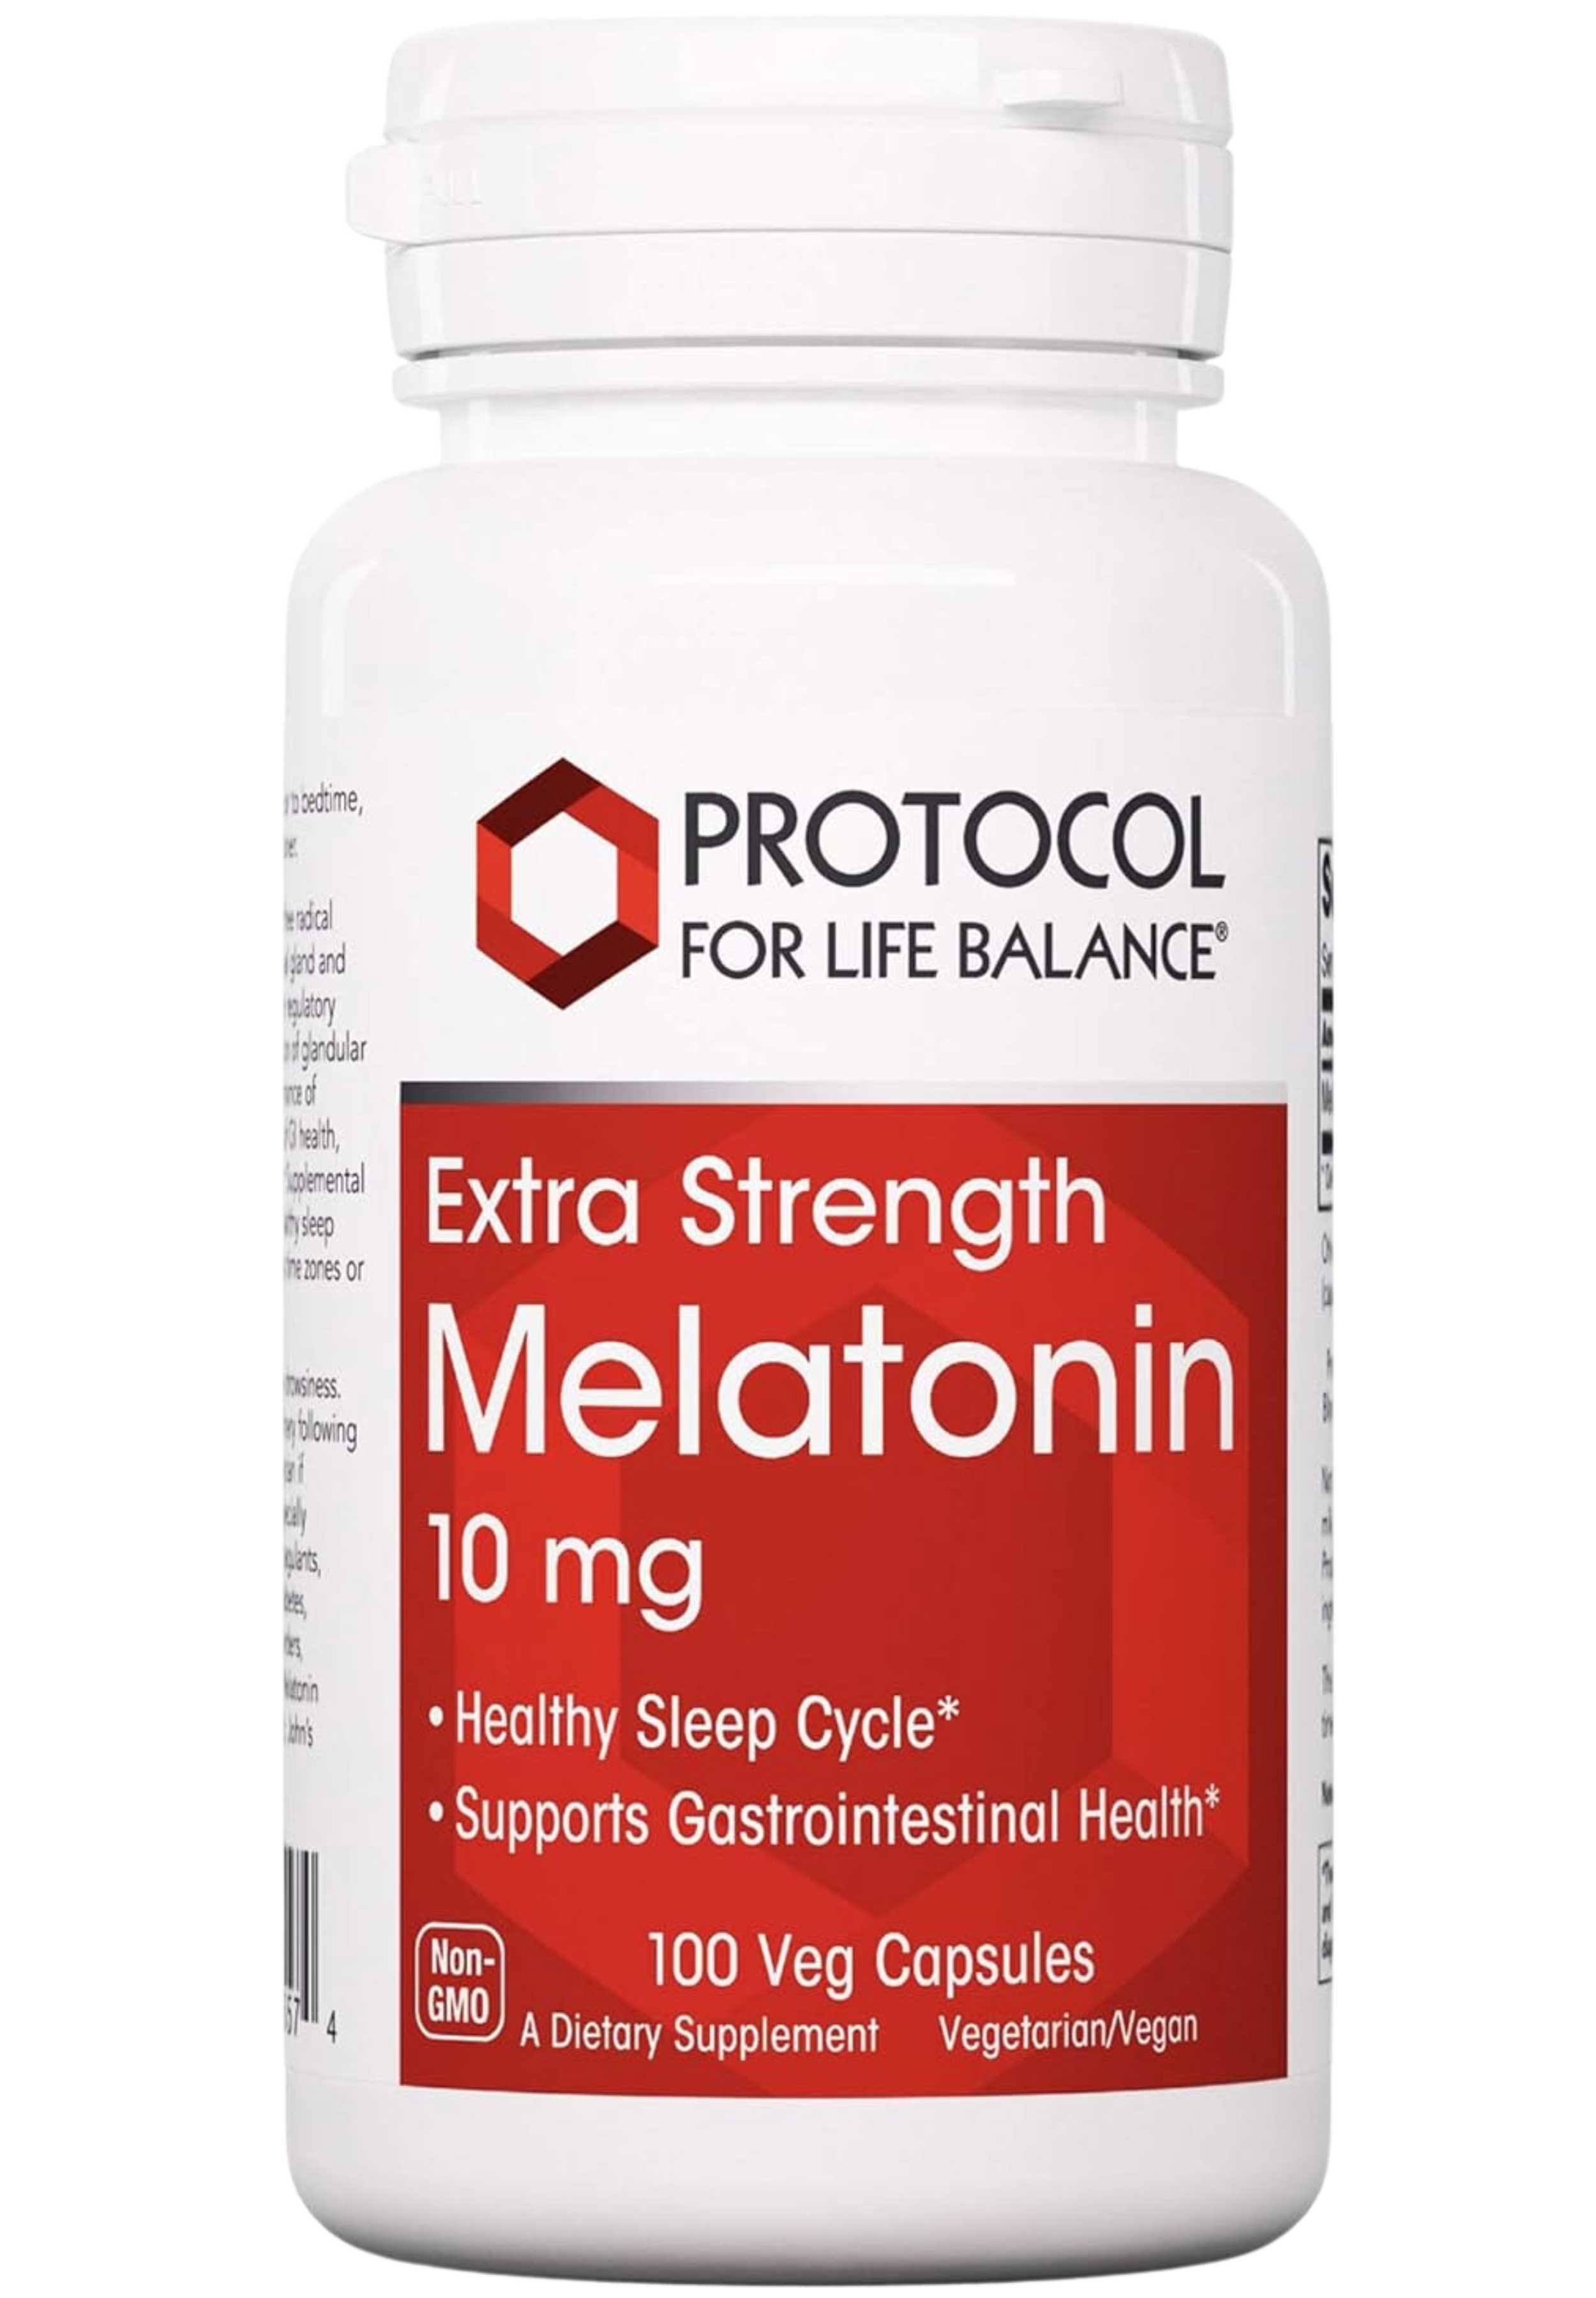 Protocol for Life Balance Extra Strength Melatonin 10 mg